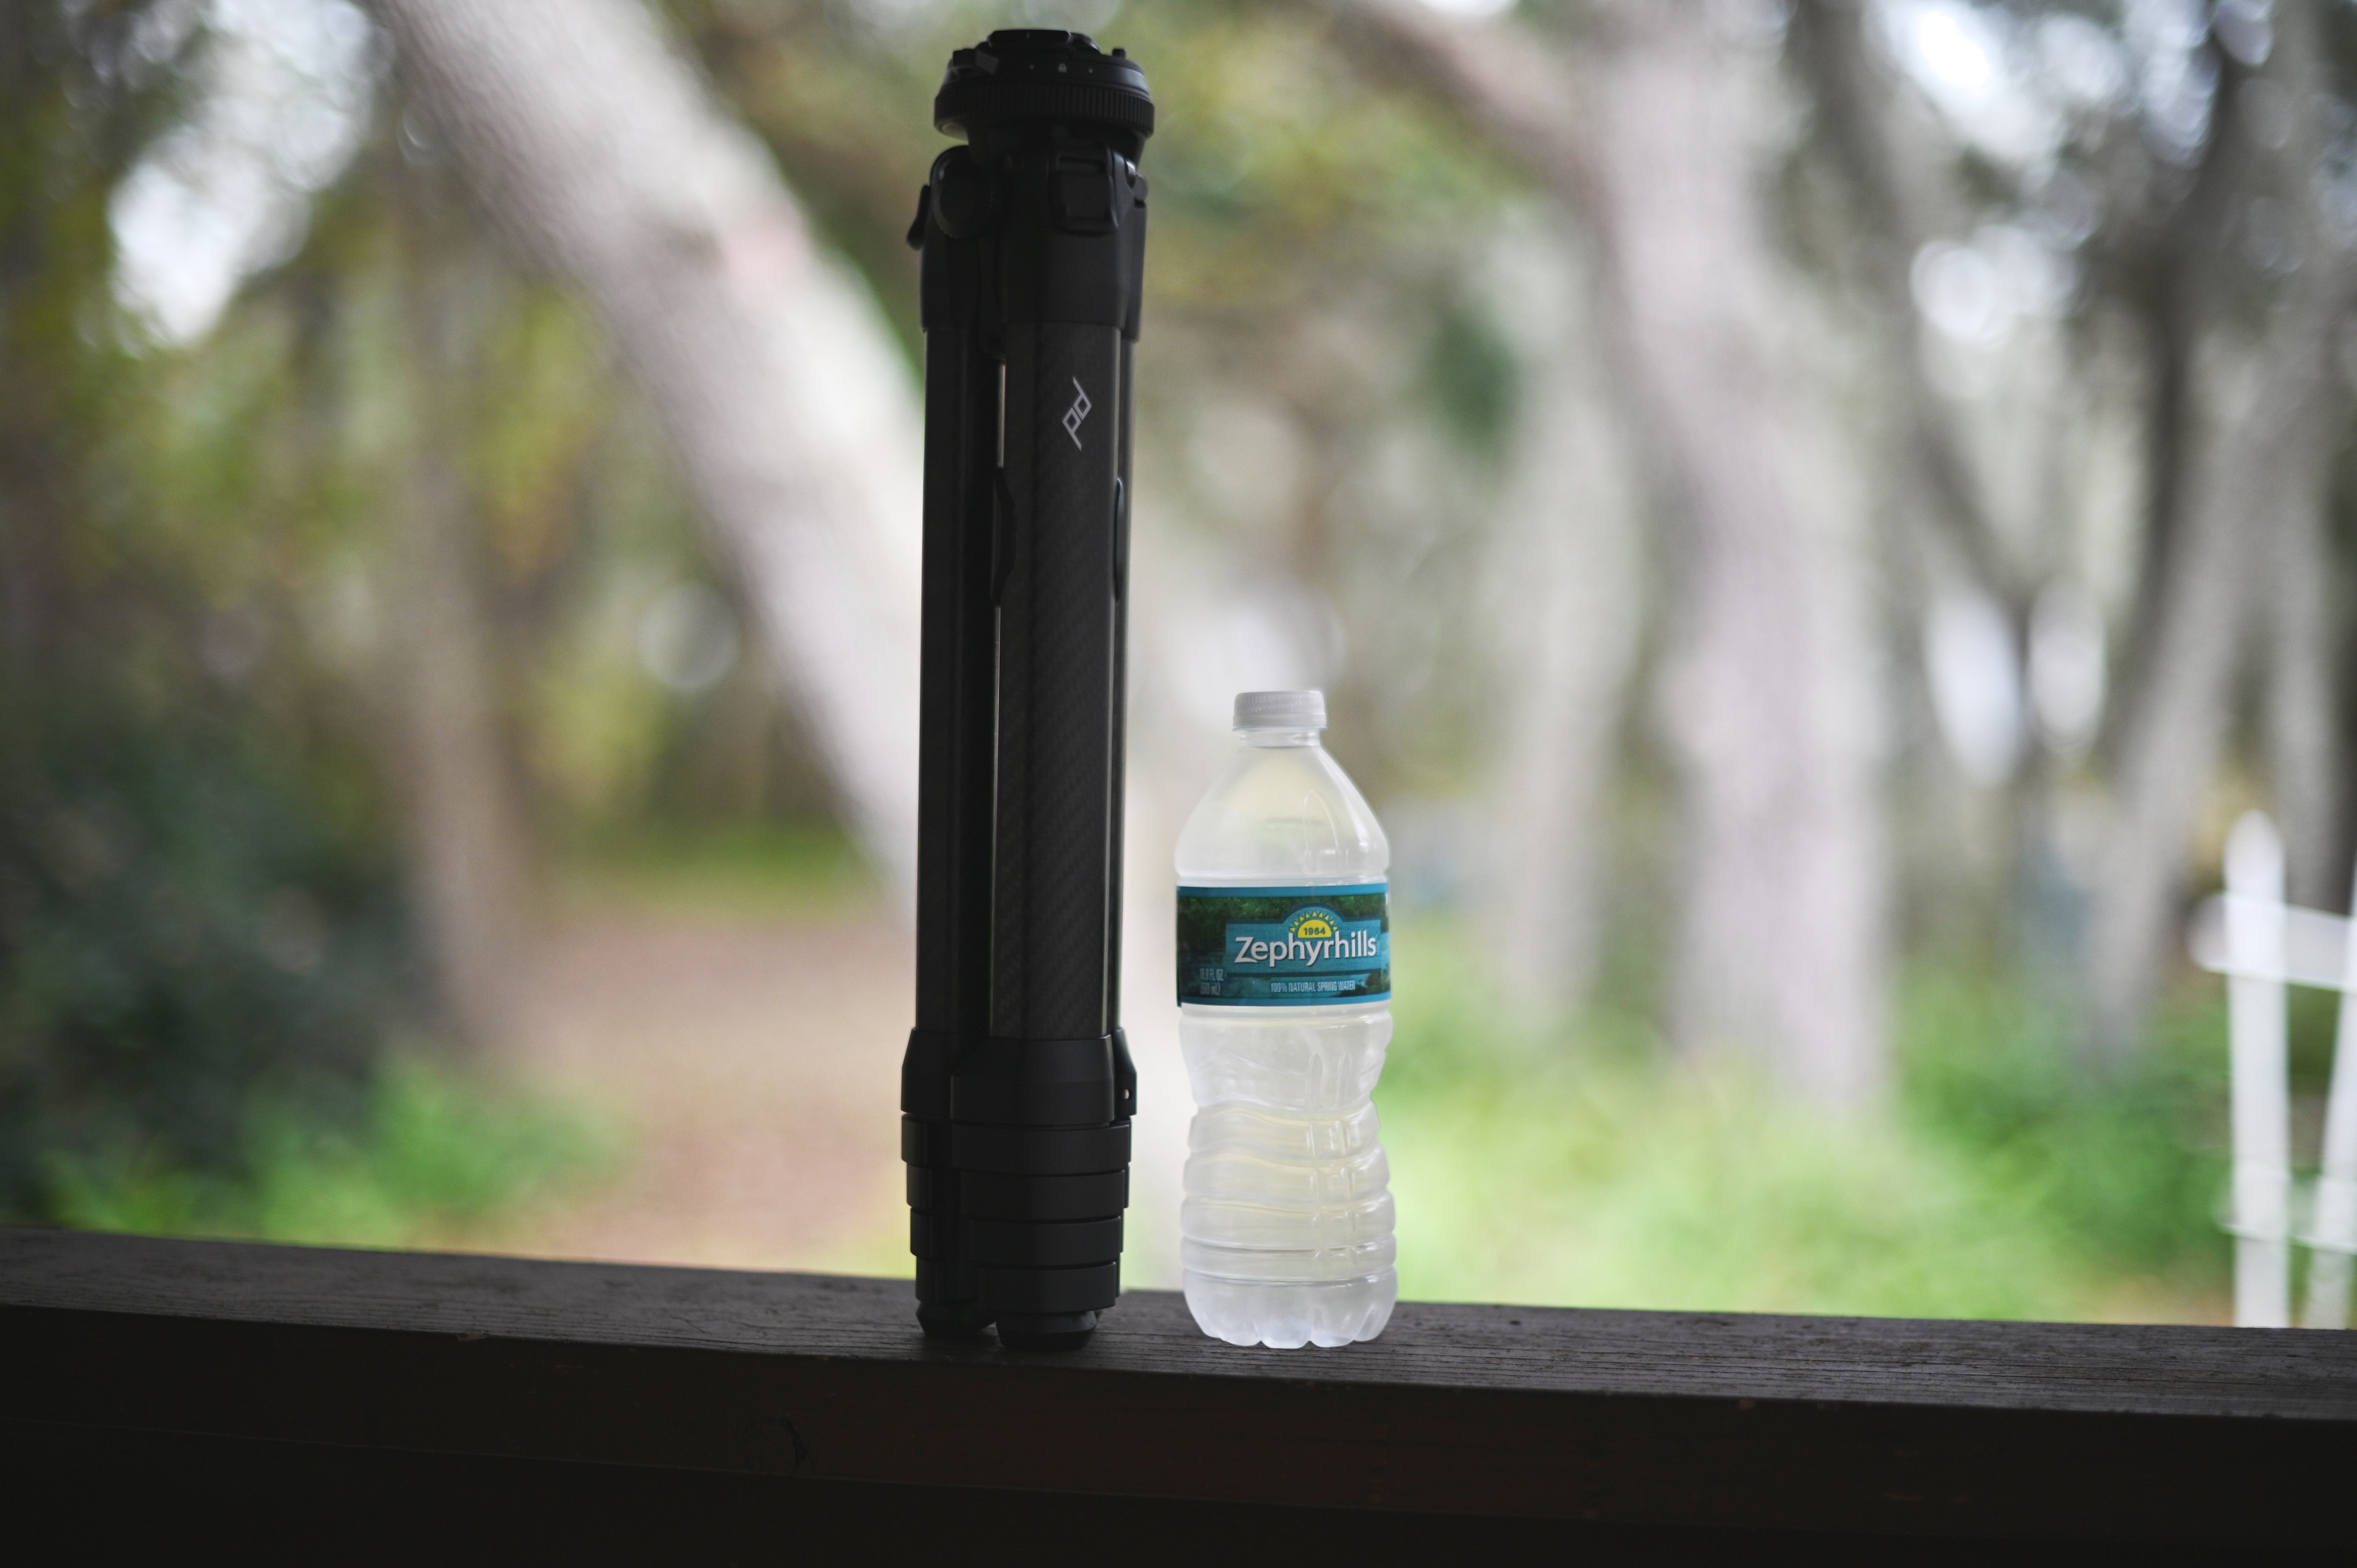 Peak Design travel tripod near a water bottle for comparison.